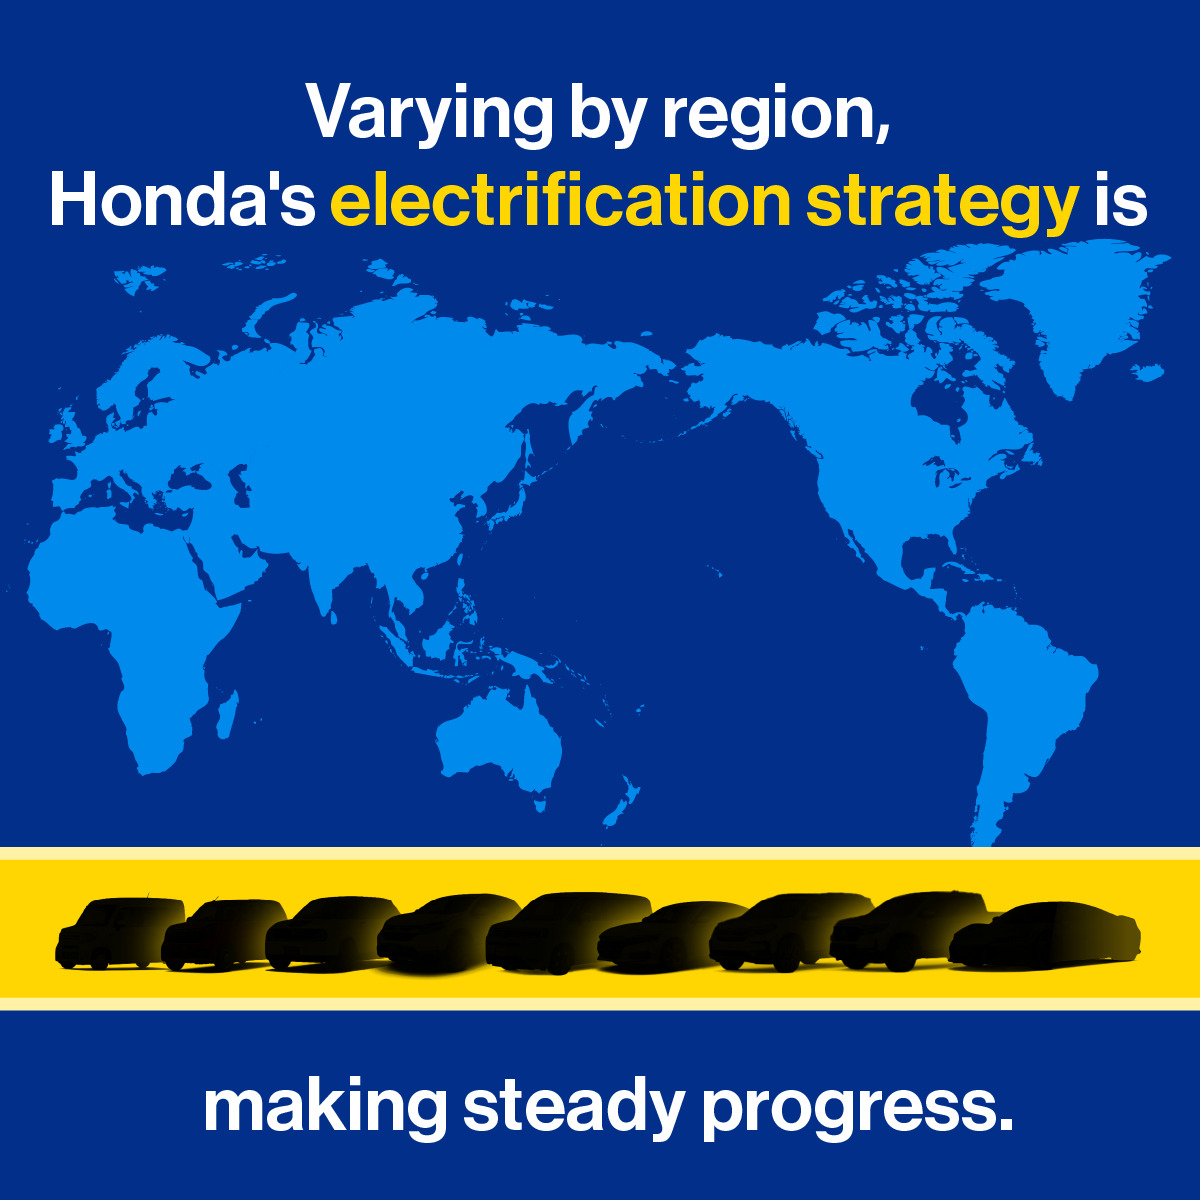 Honda's electrification strategy is making steady progress